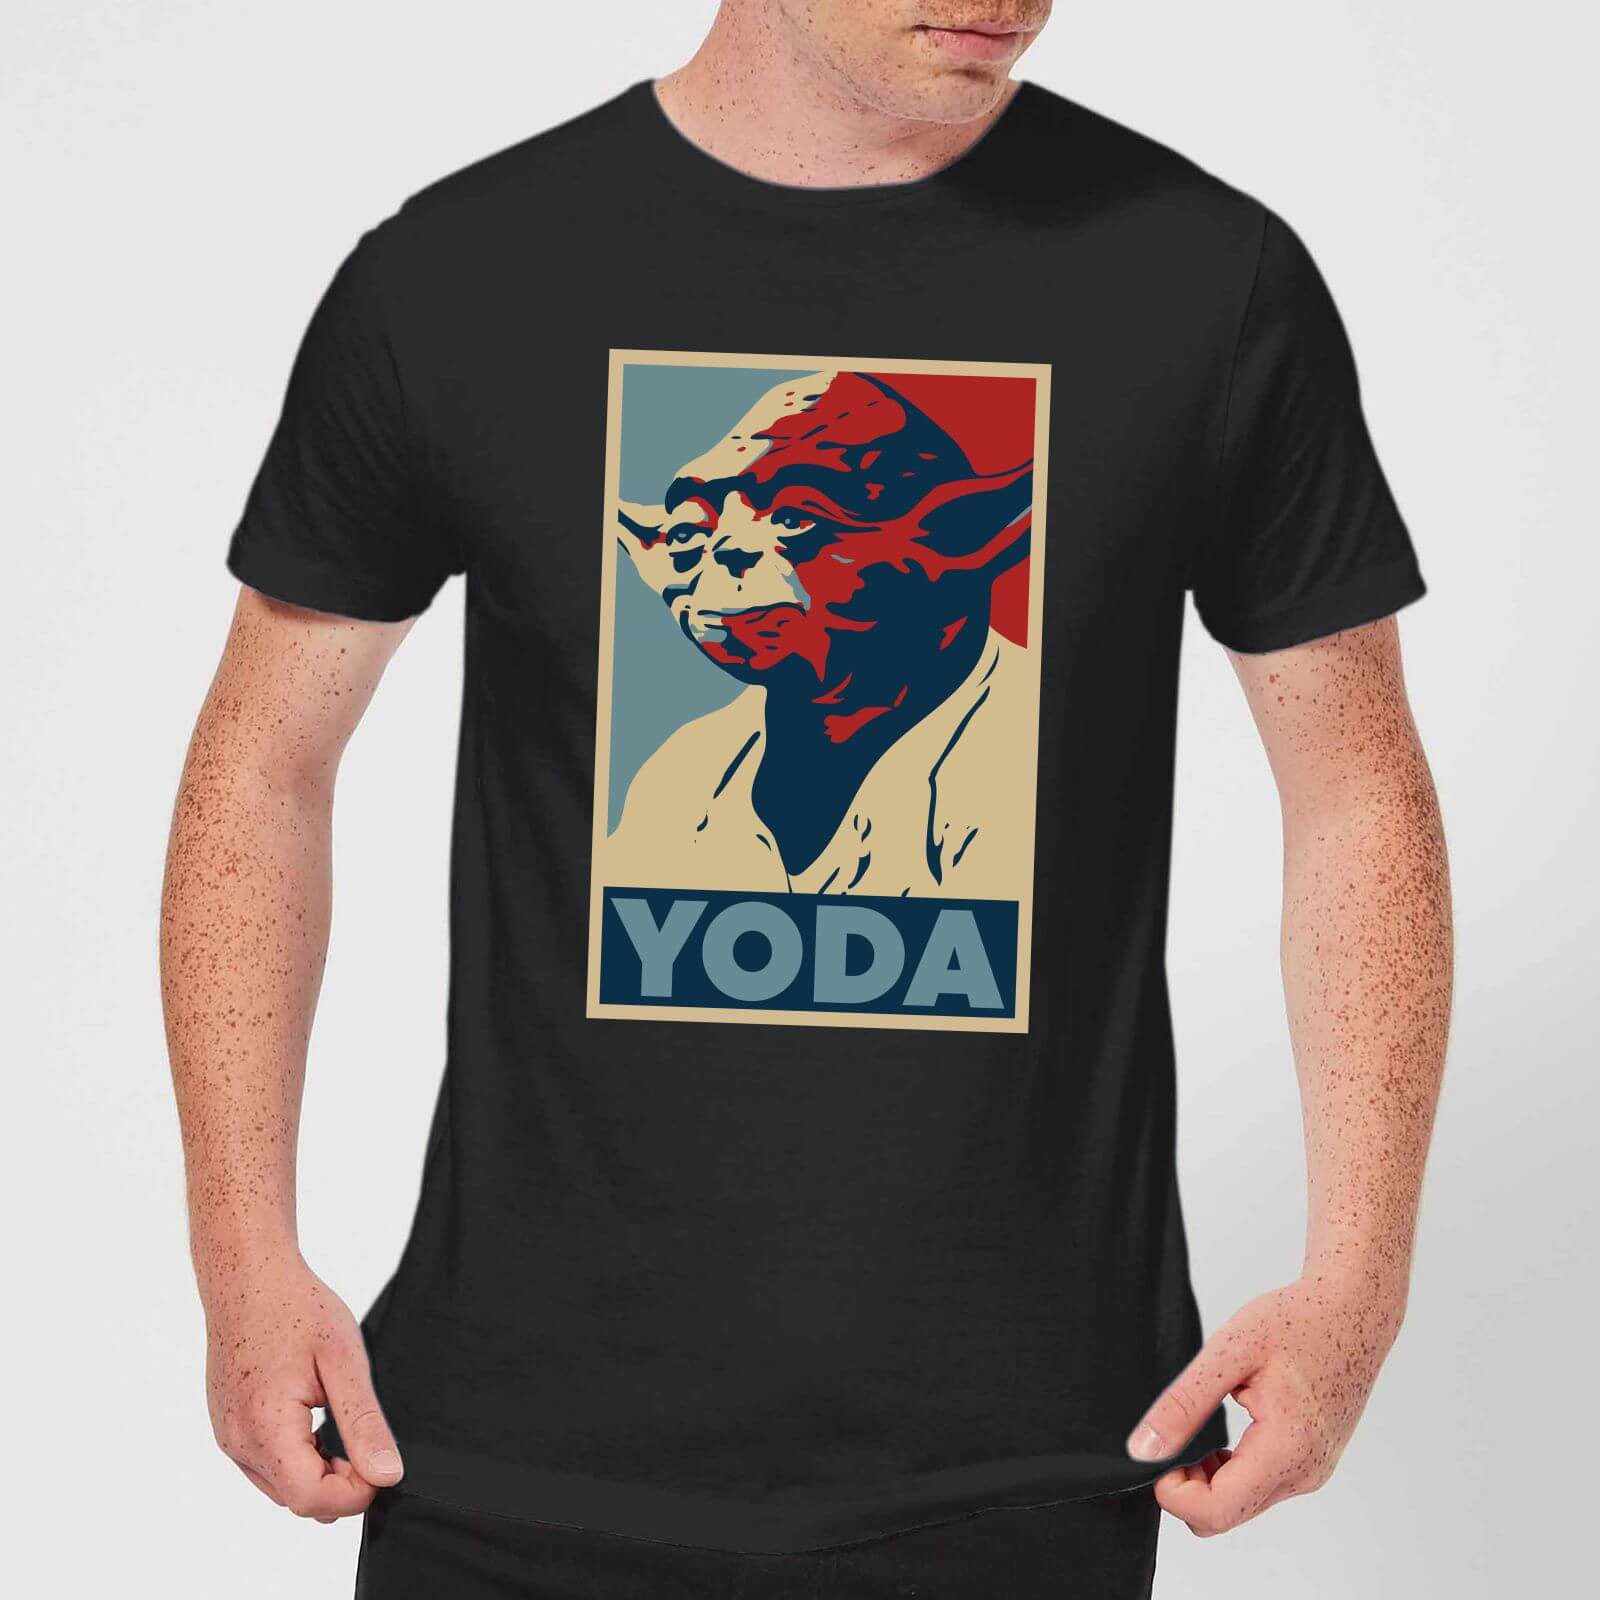 Star Wars Yoda Poster Men's T-Shirt - Black - 3XL - Black